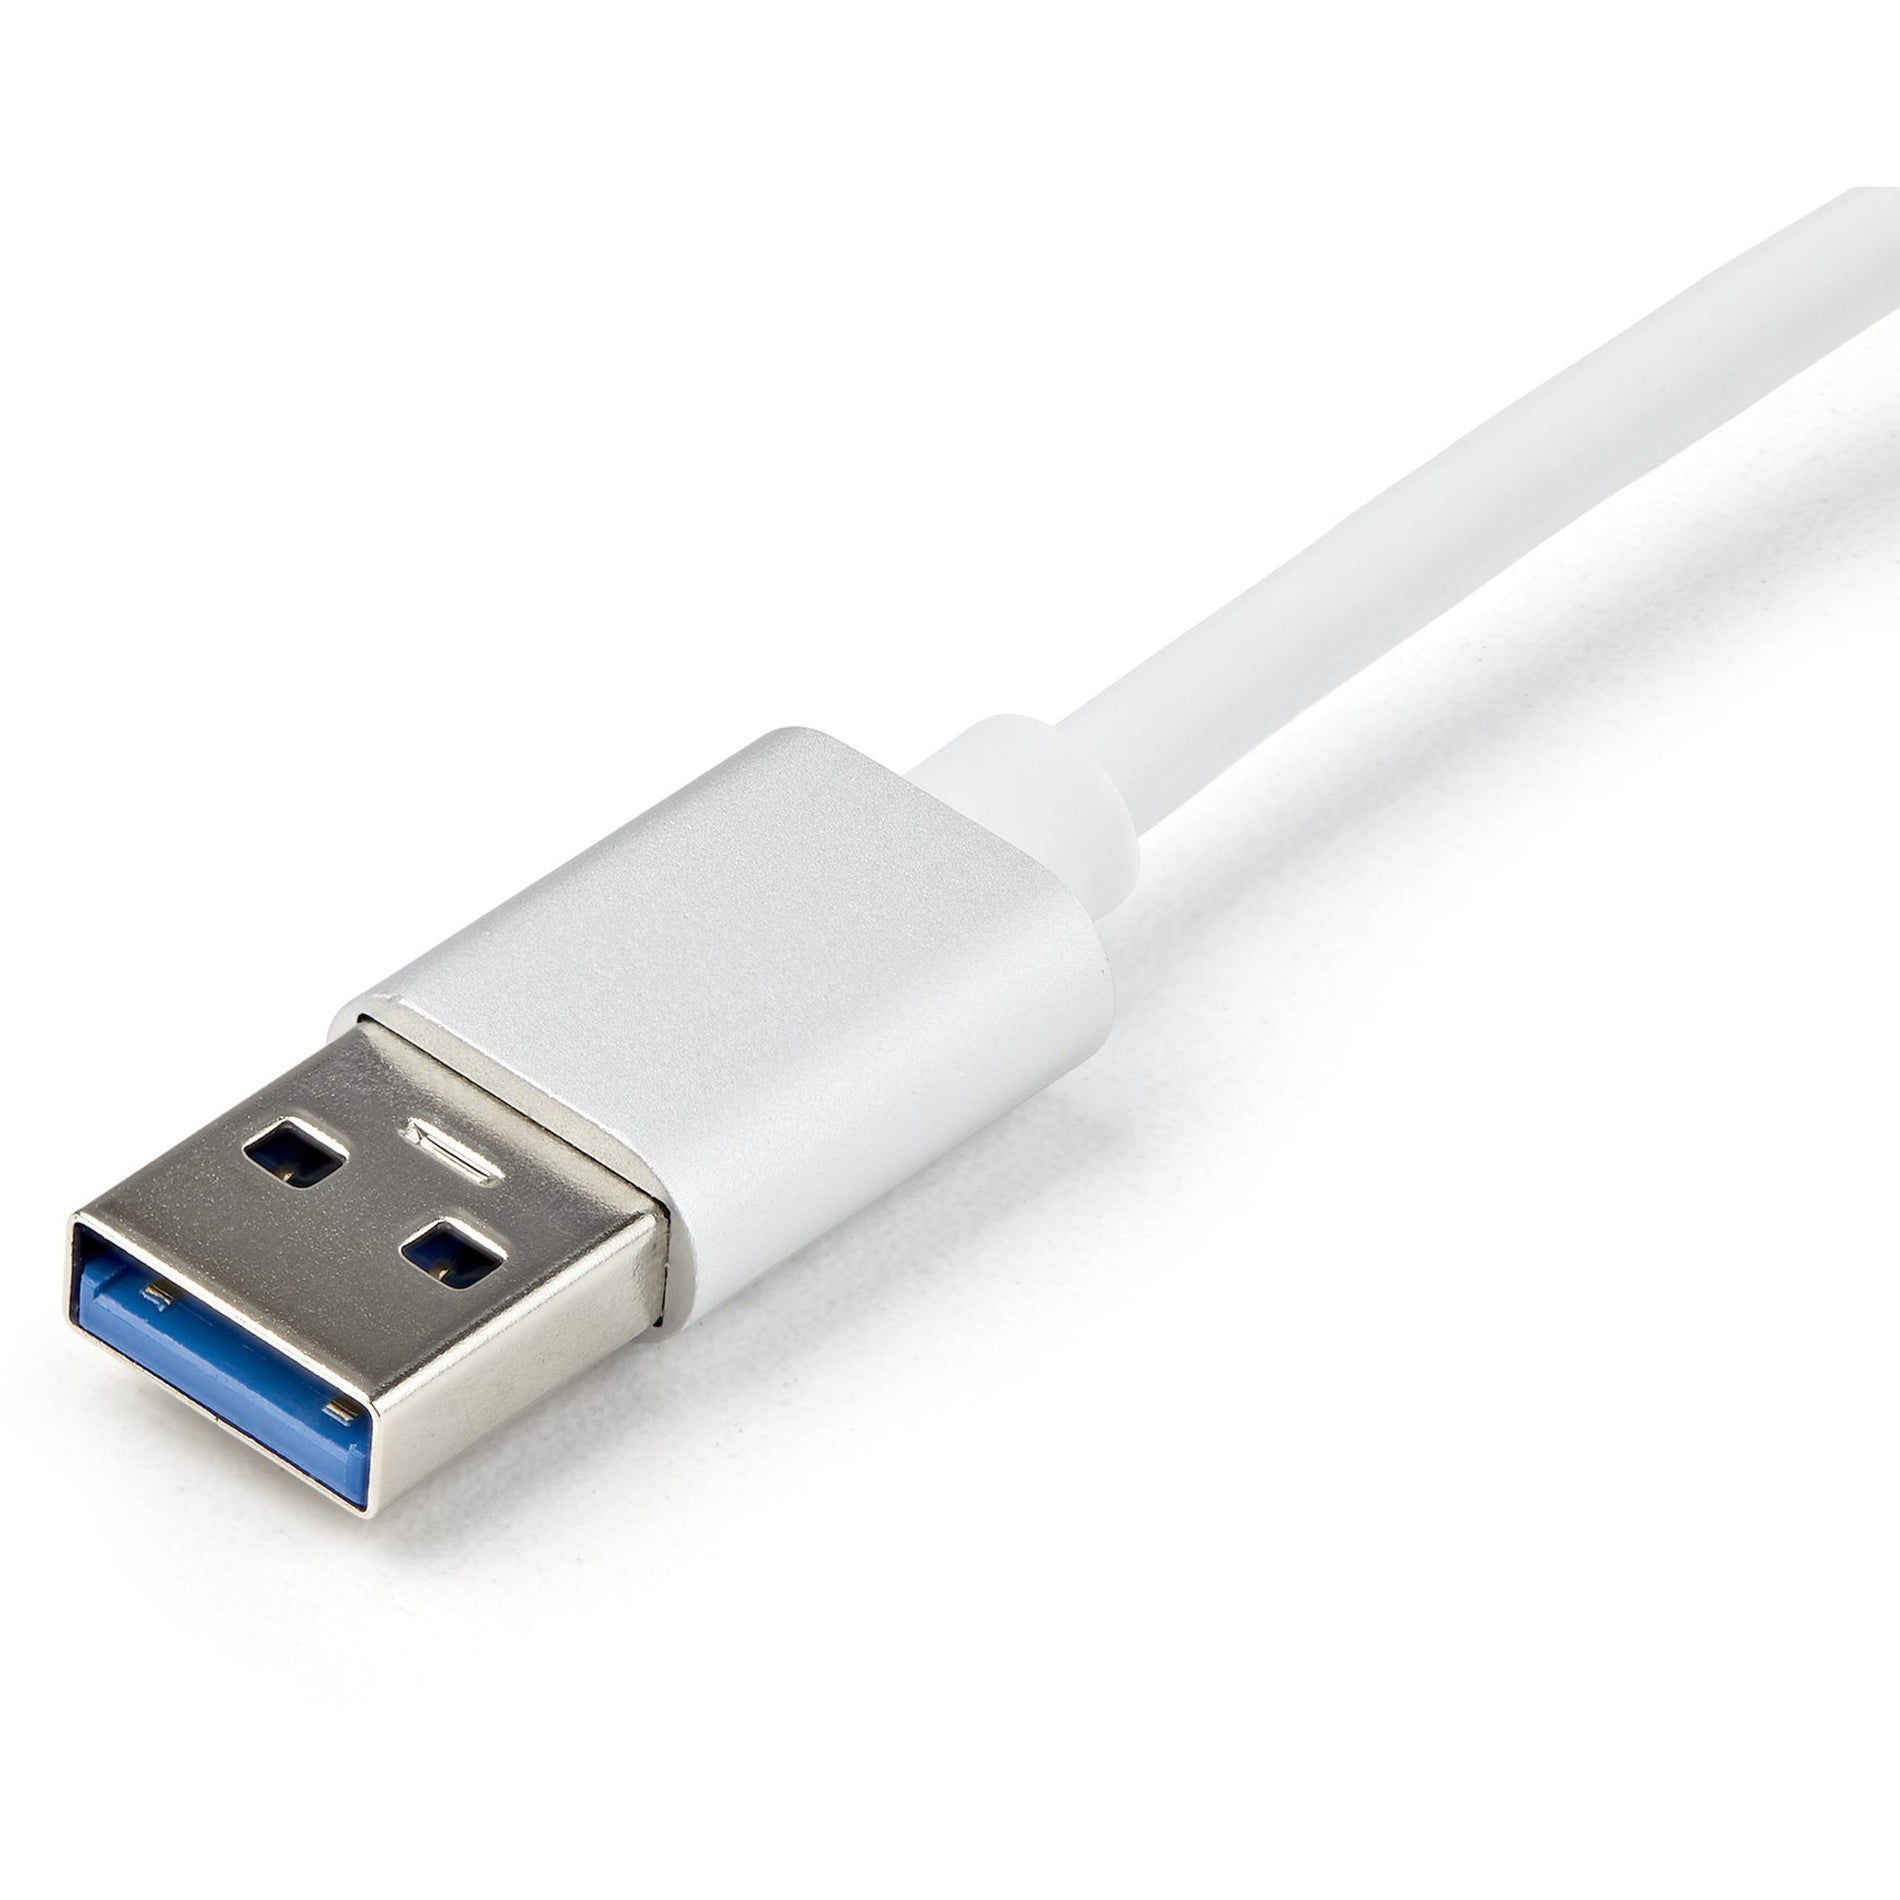 StarTech.com USB31000SA USB 3.0 to Gigabit Network Adapter - Silver, Sleek Aluminum Design Ideal for MacBook, Chromebook or Tablet